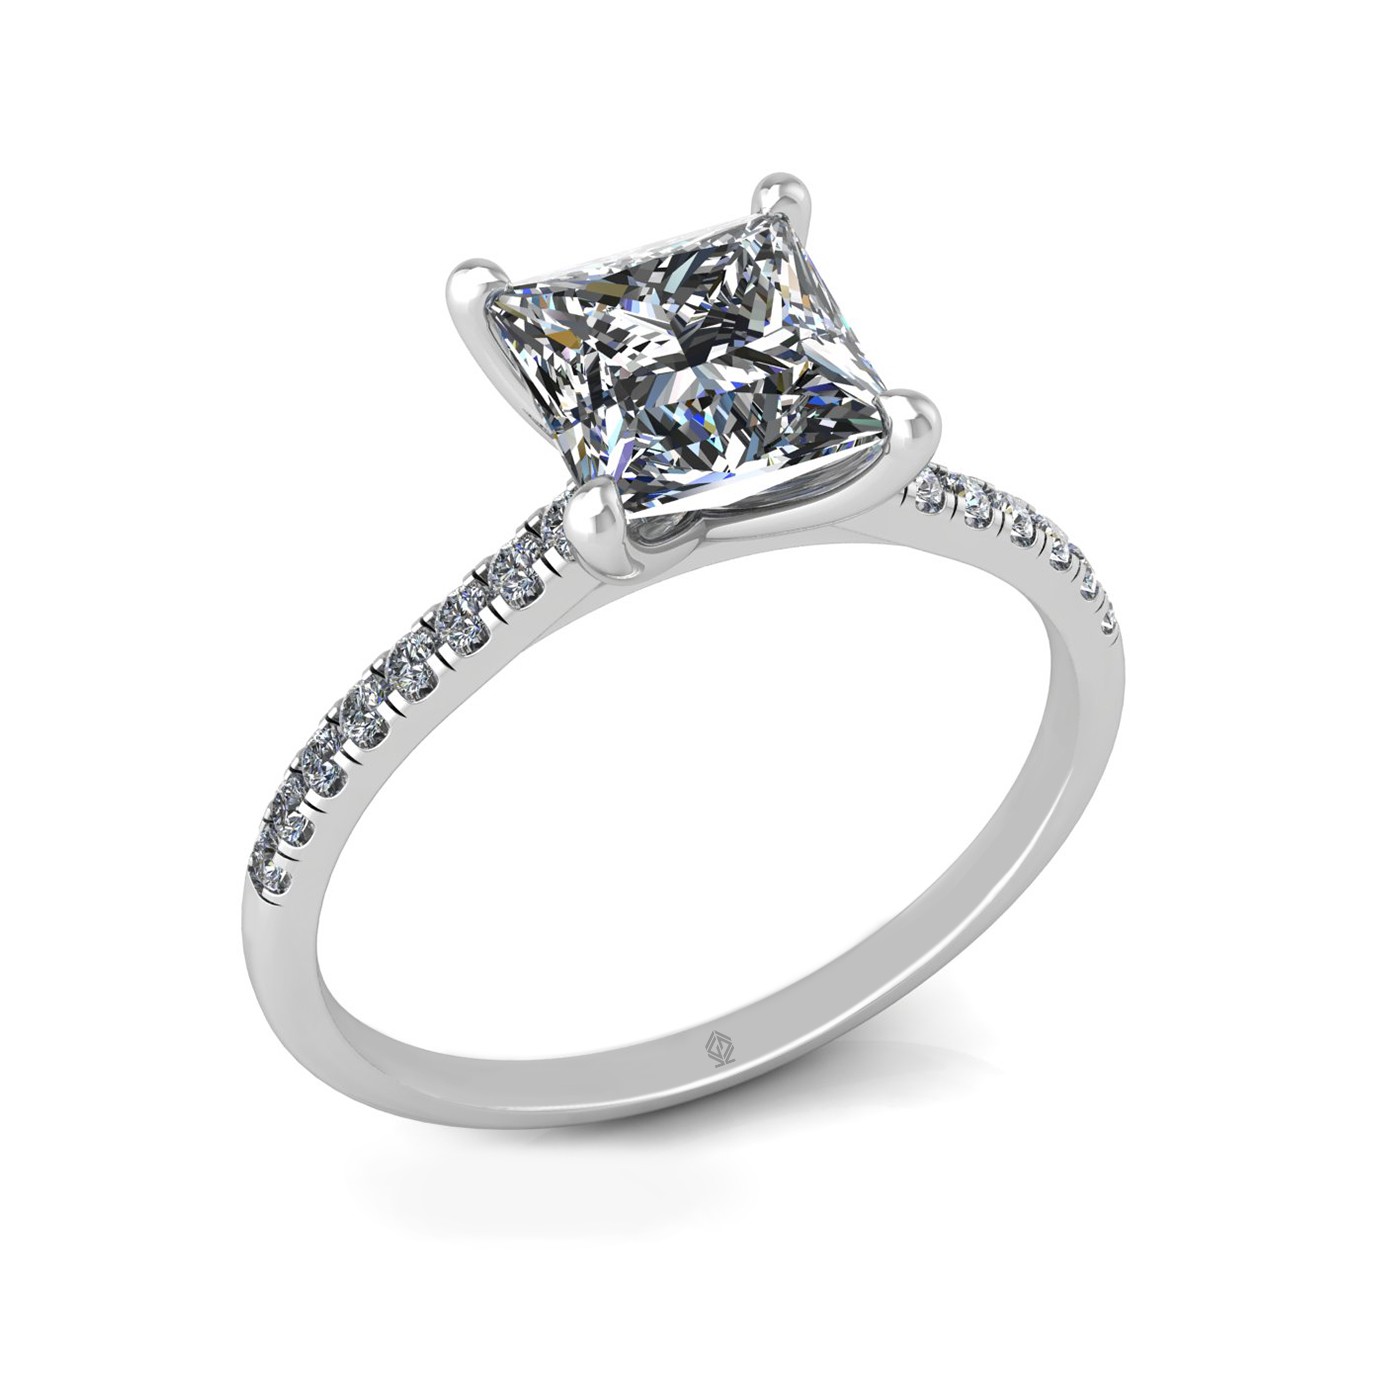 18k white gold 1,50 ct 4 prongs princess cut diamond engagement ring with whisper thin pavÉ set band